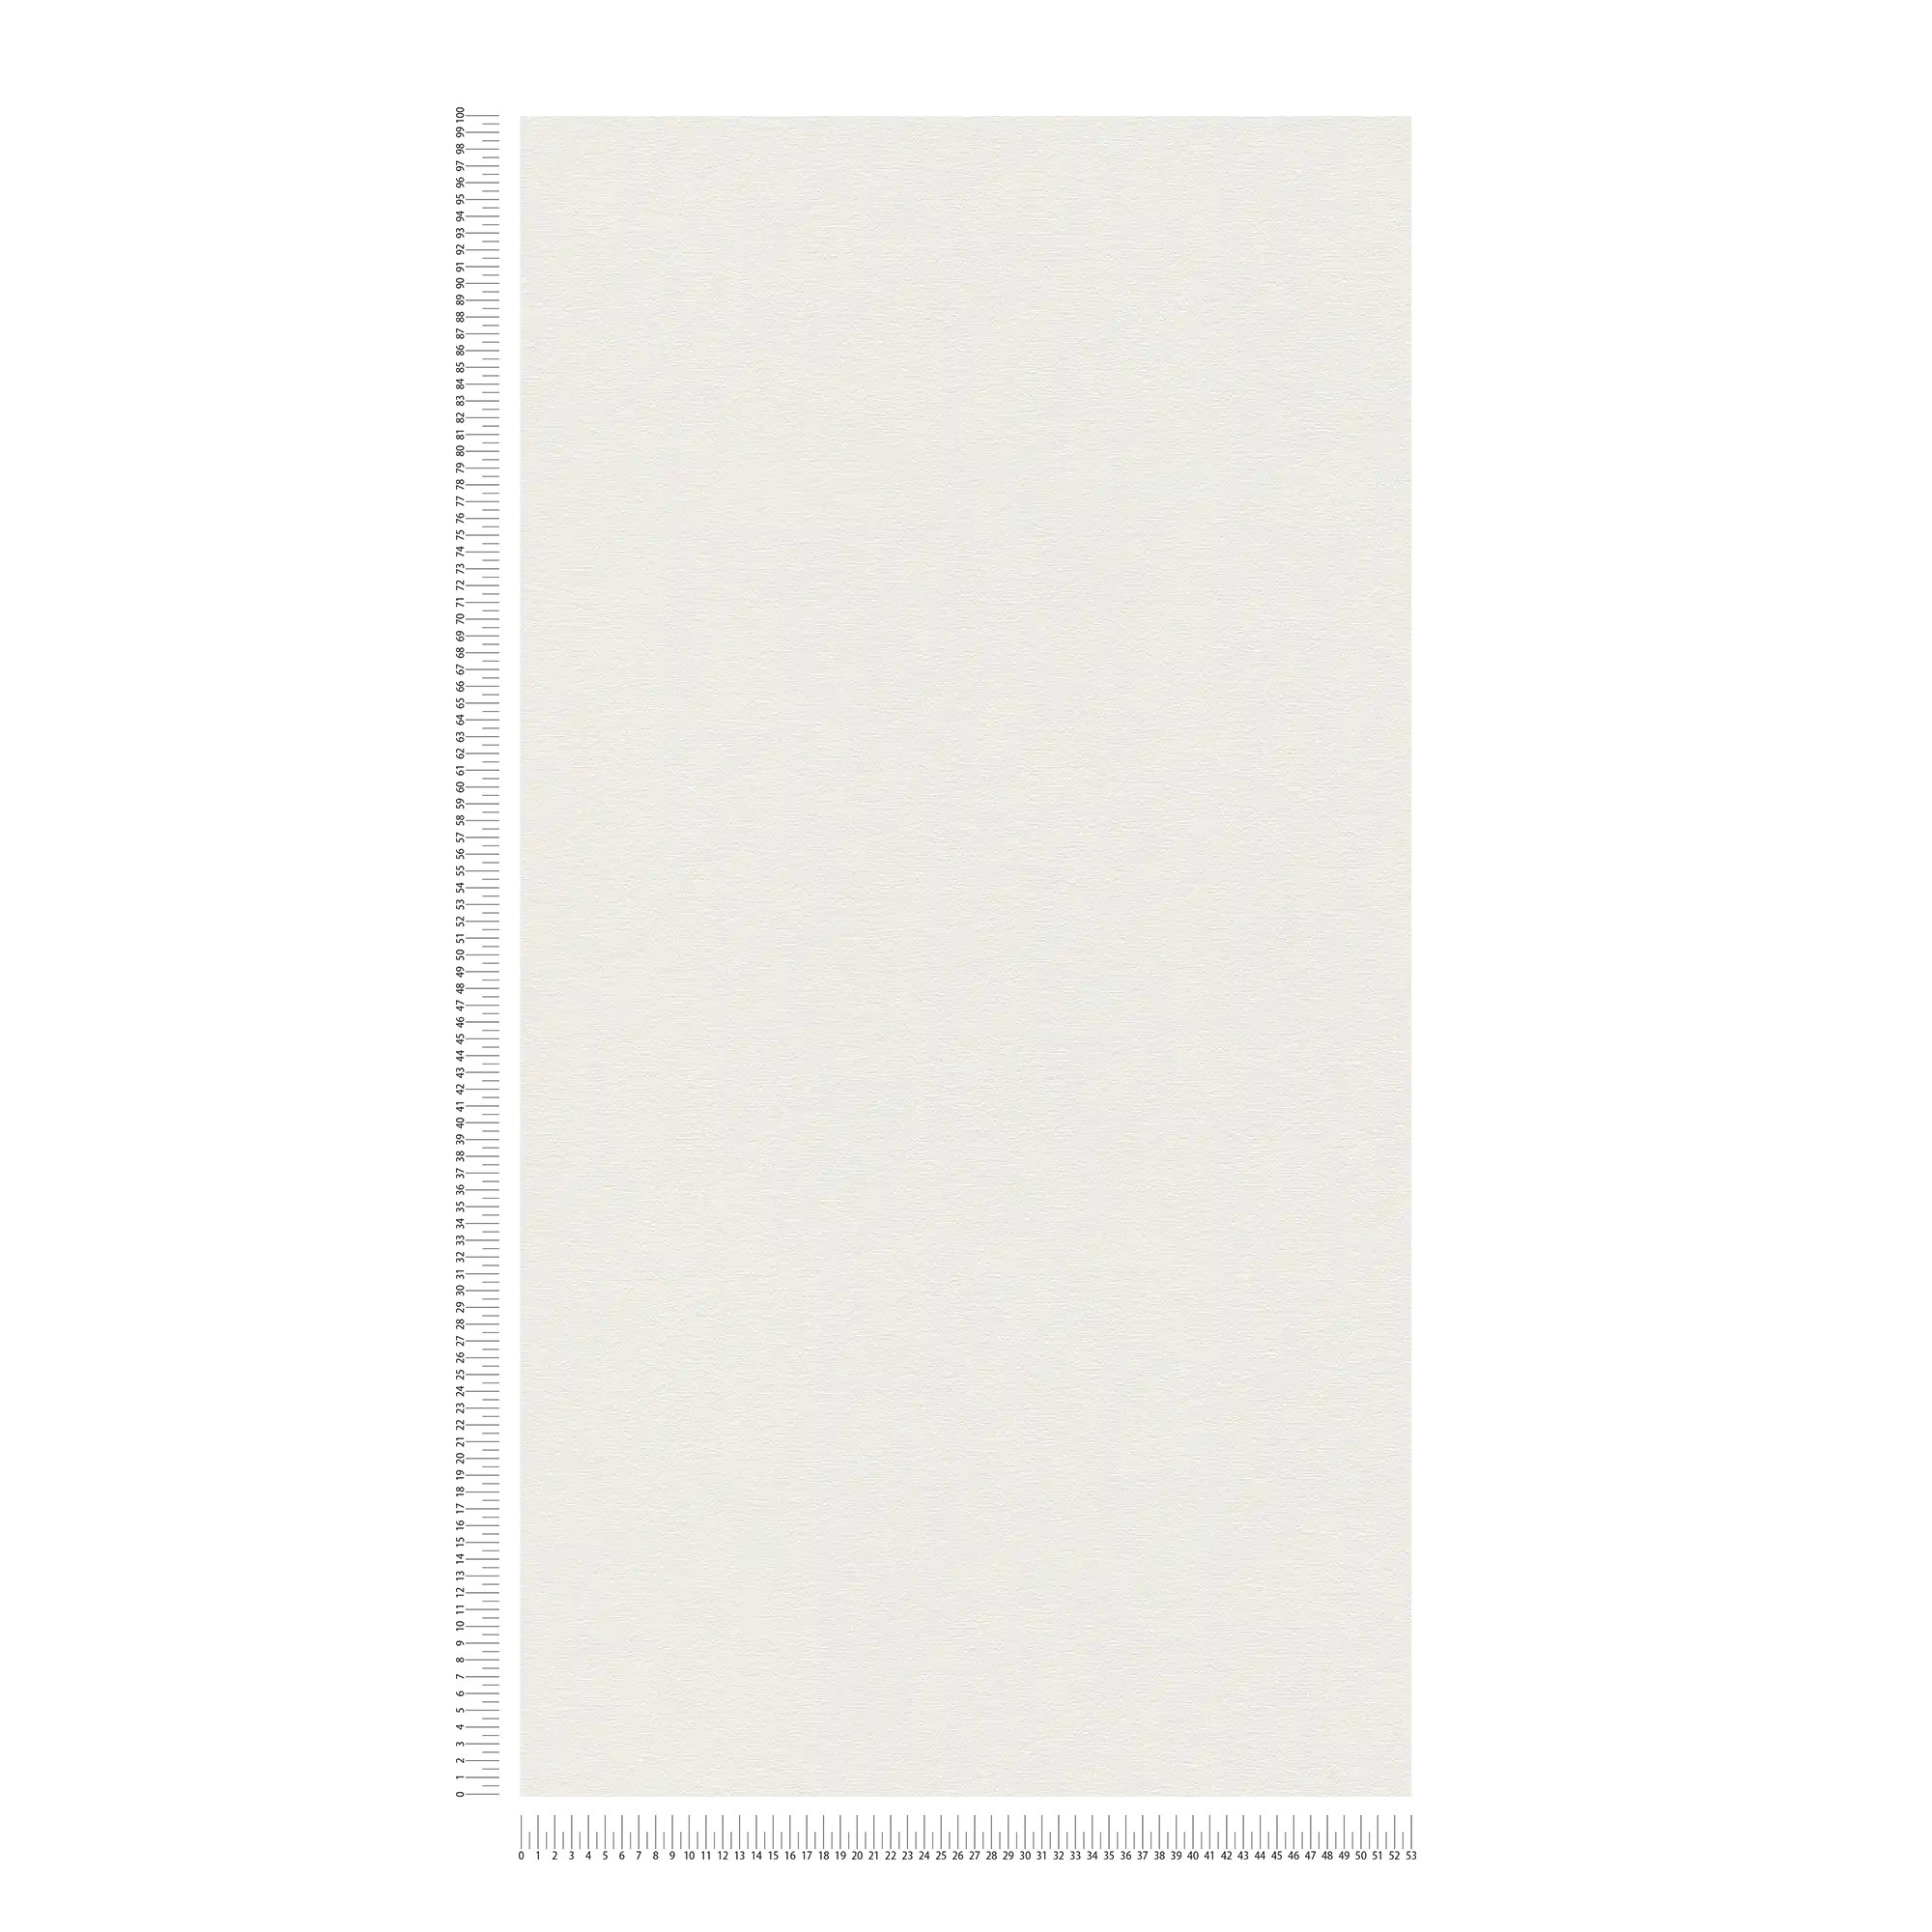             Plain wallpaper lightly textured in matt look - white, cream
        